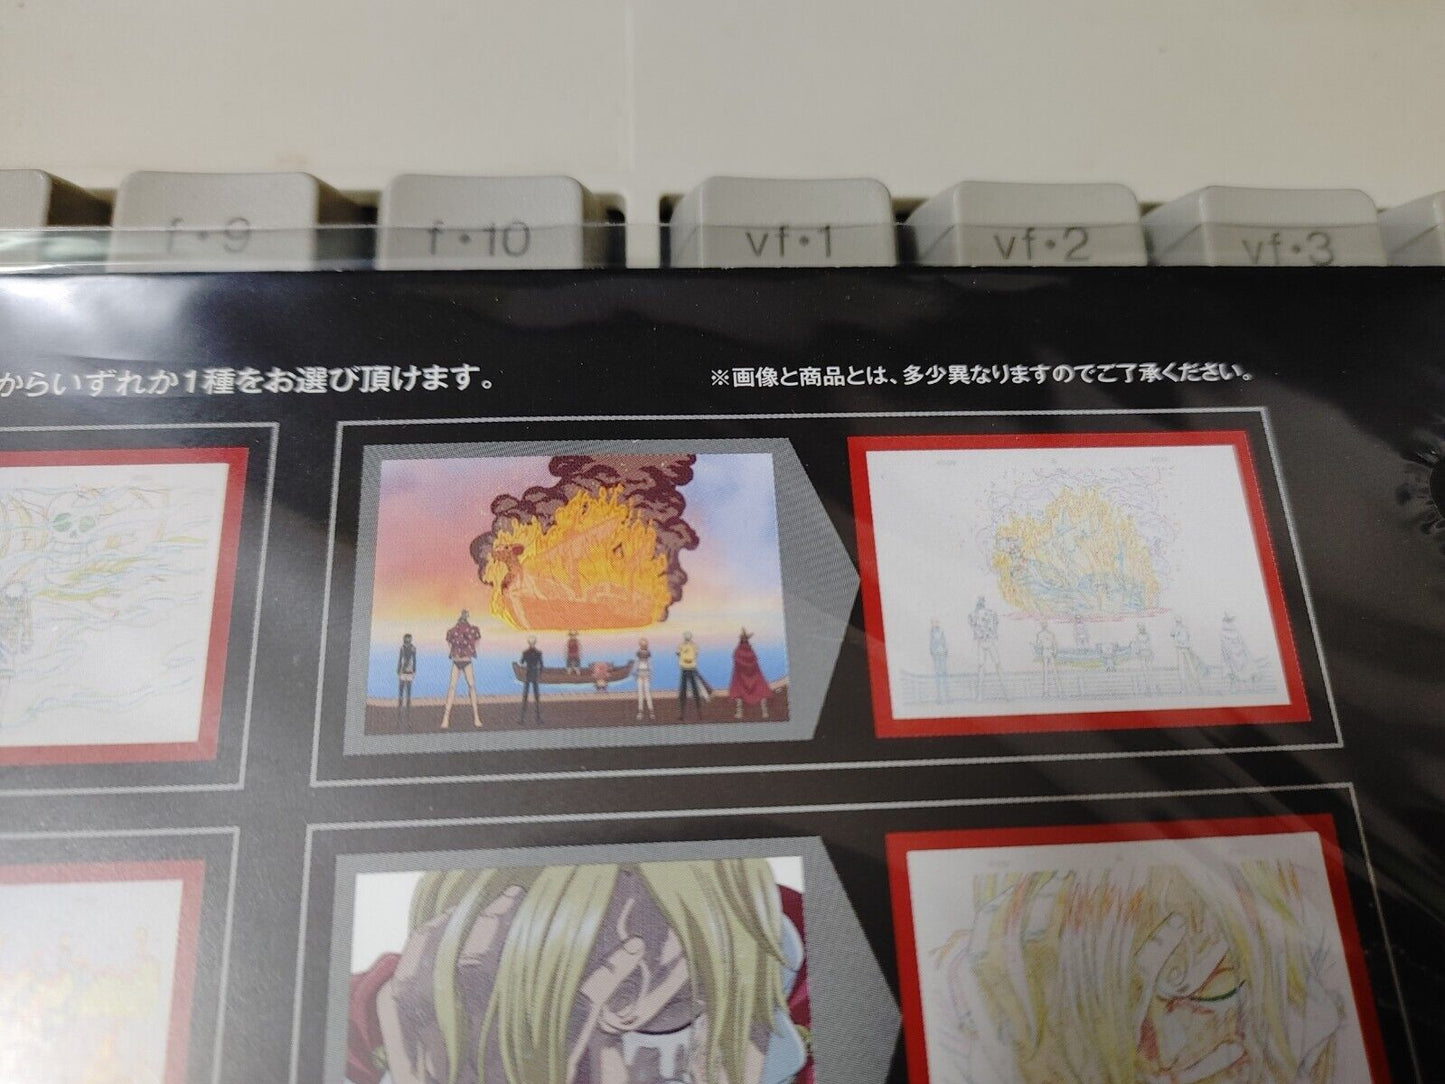 Anime One Piece Animation Cel Print Design Battle Memories E3 Japan Limited